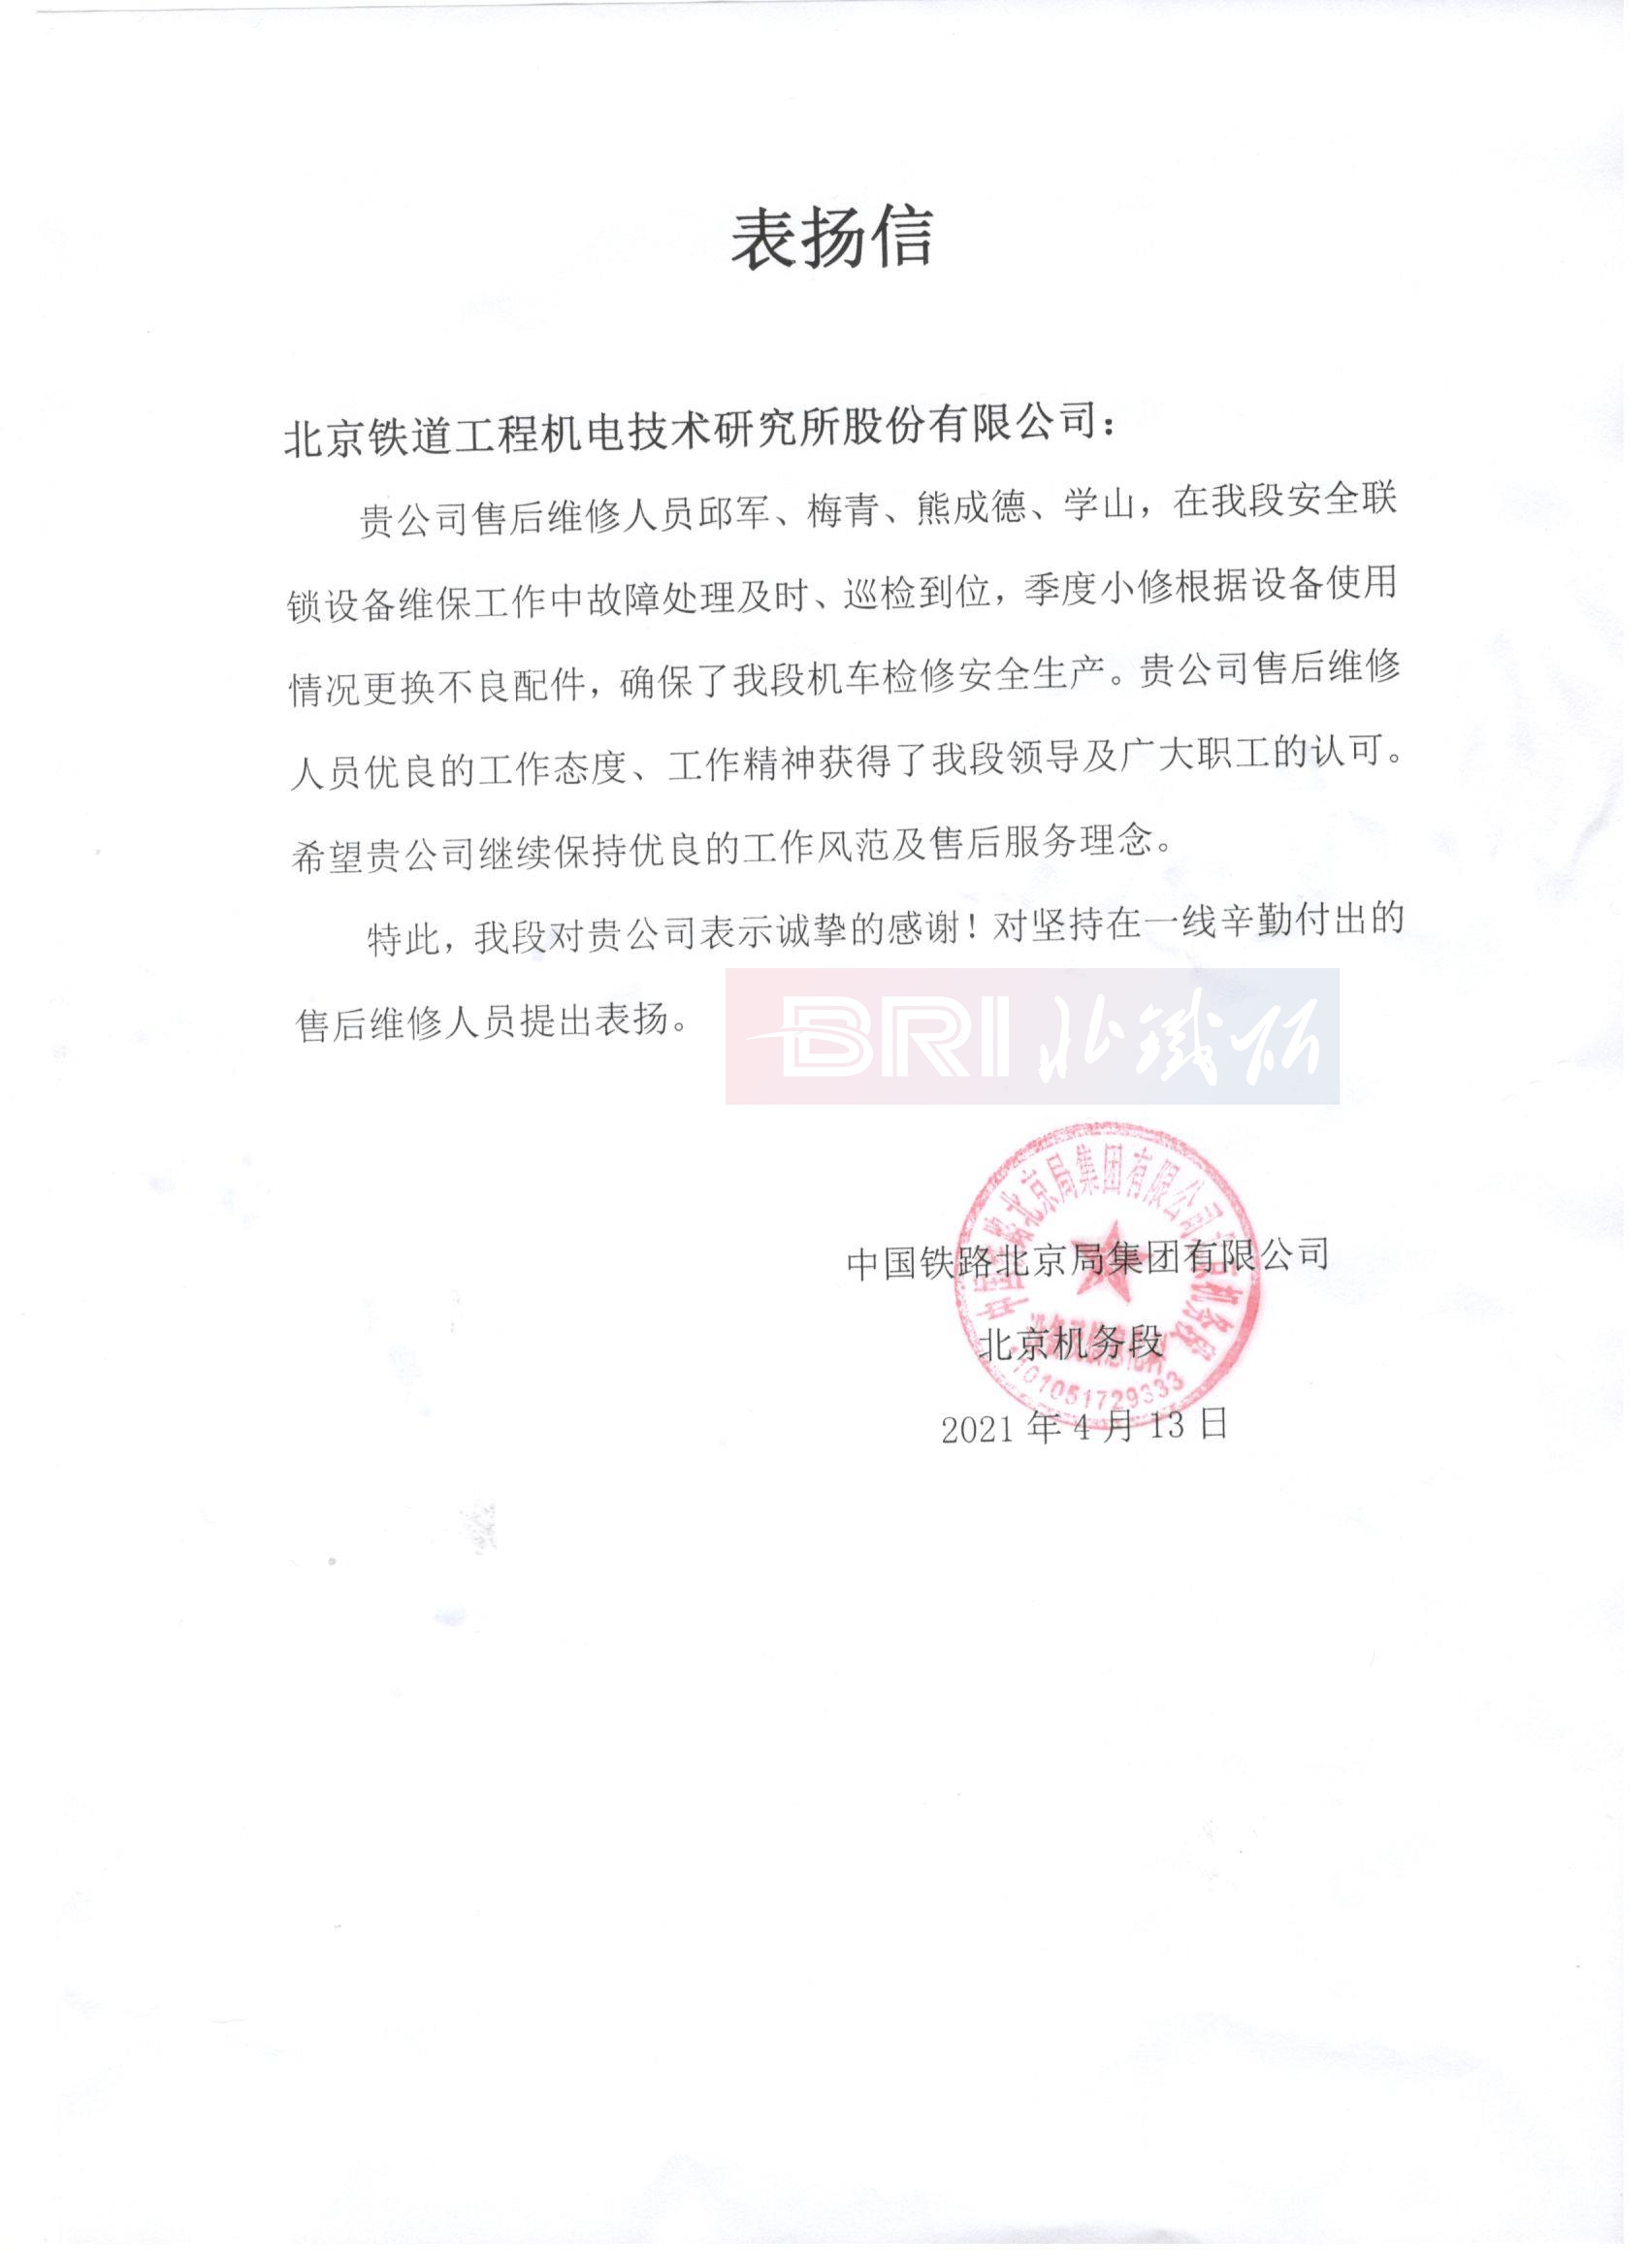 The commendation letter from Beijing Locomotive Depot